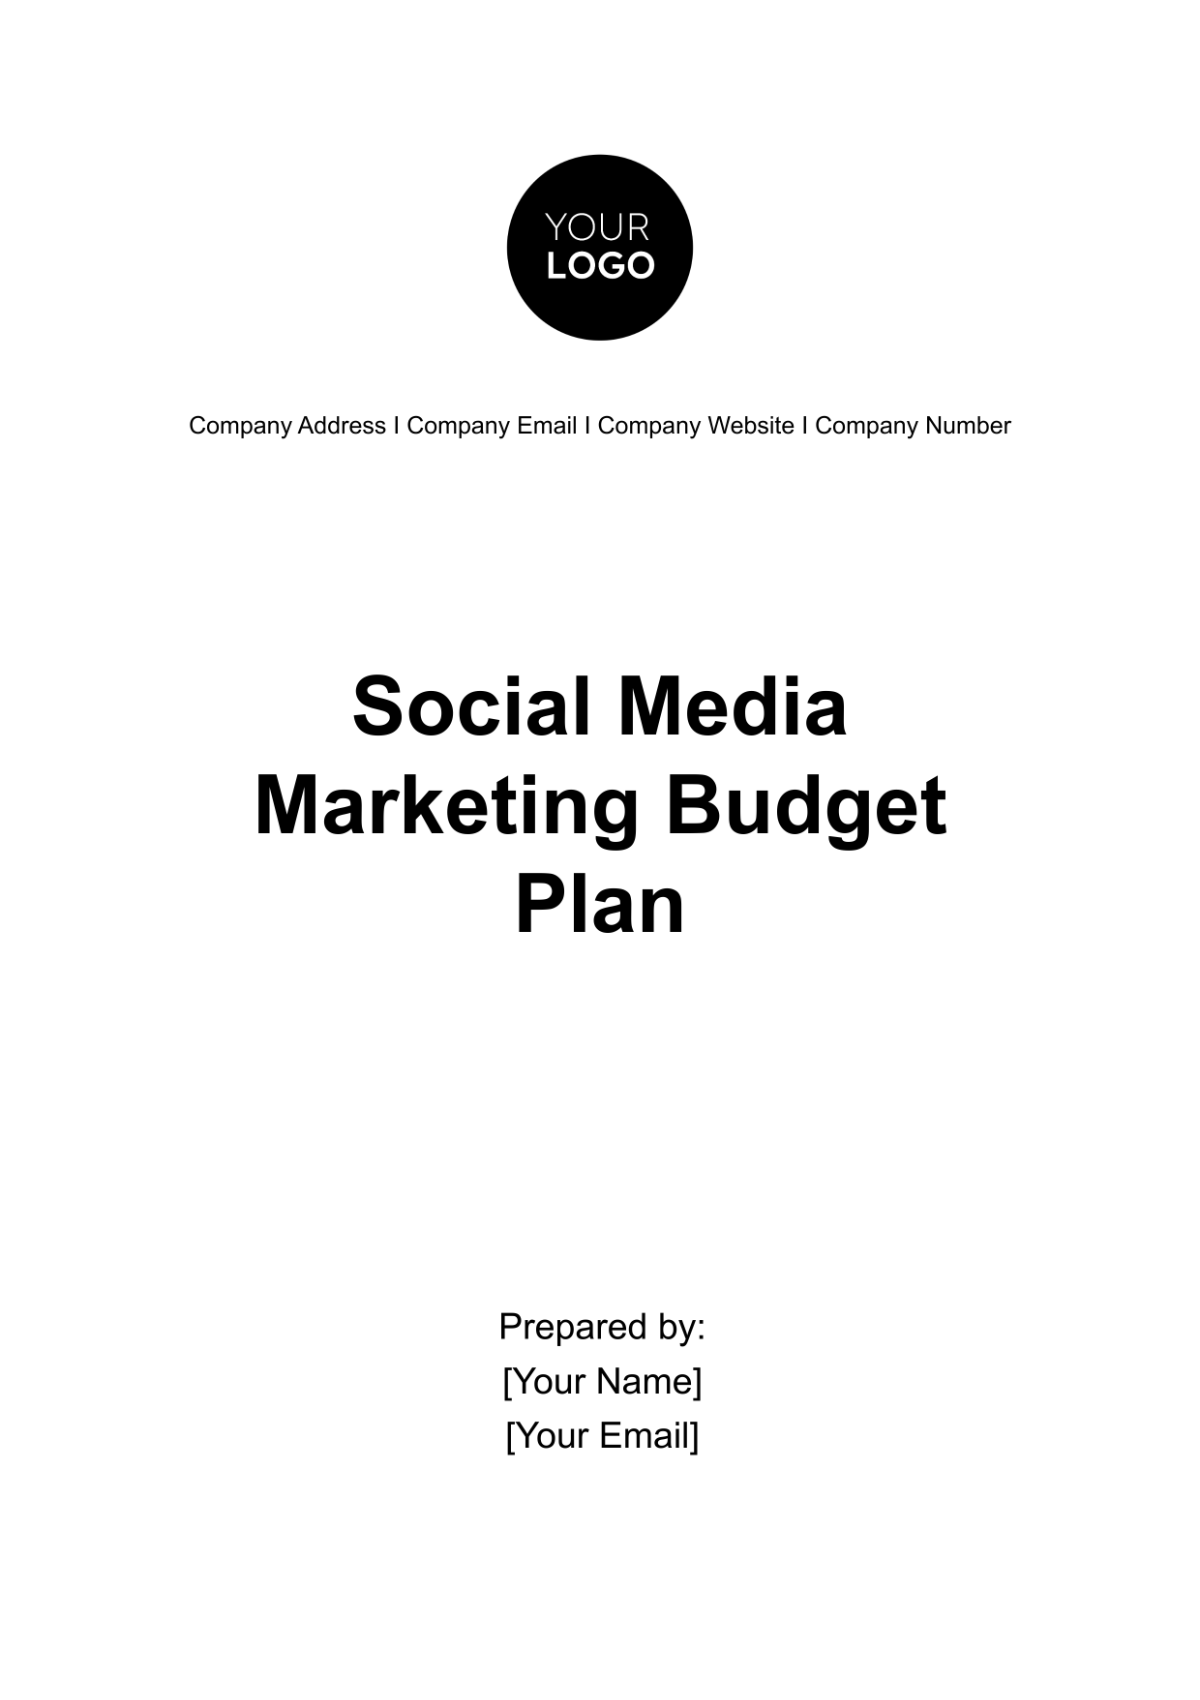 Social Media Marketing Budget Plan Template